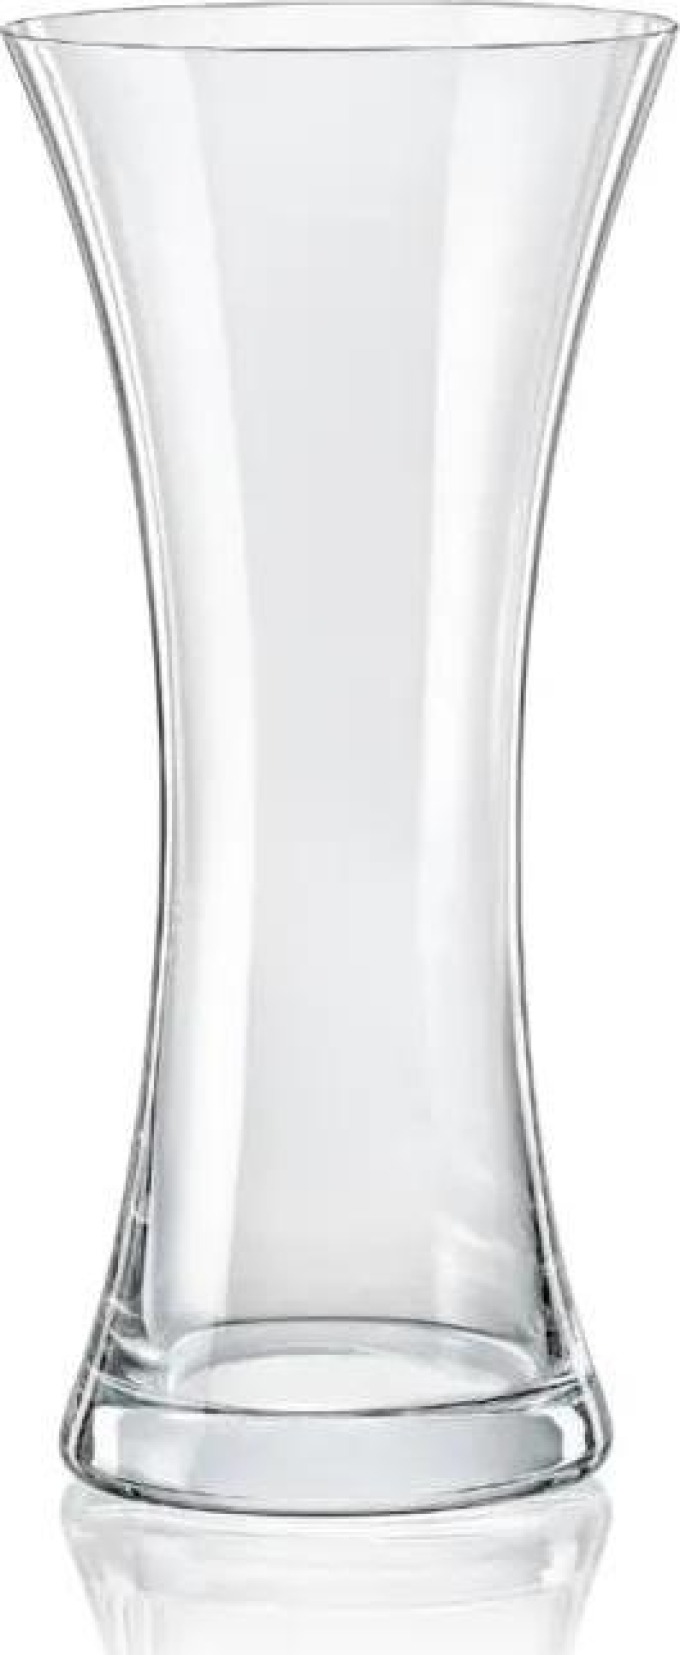 Crystalex - Bohemia Crystal Váza X, výška 340 mm, 1 ks